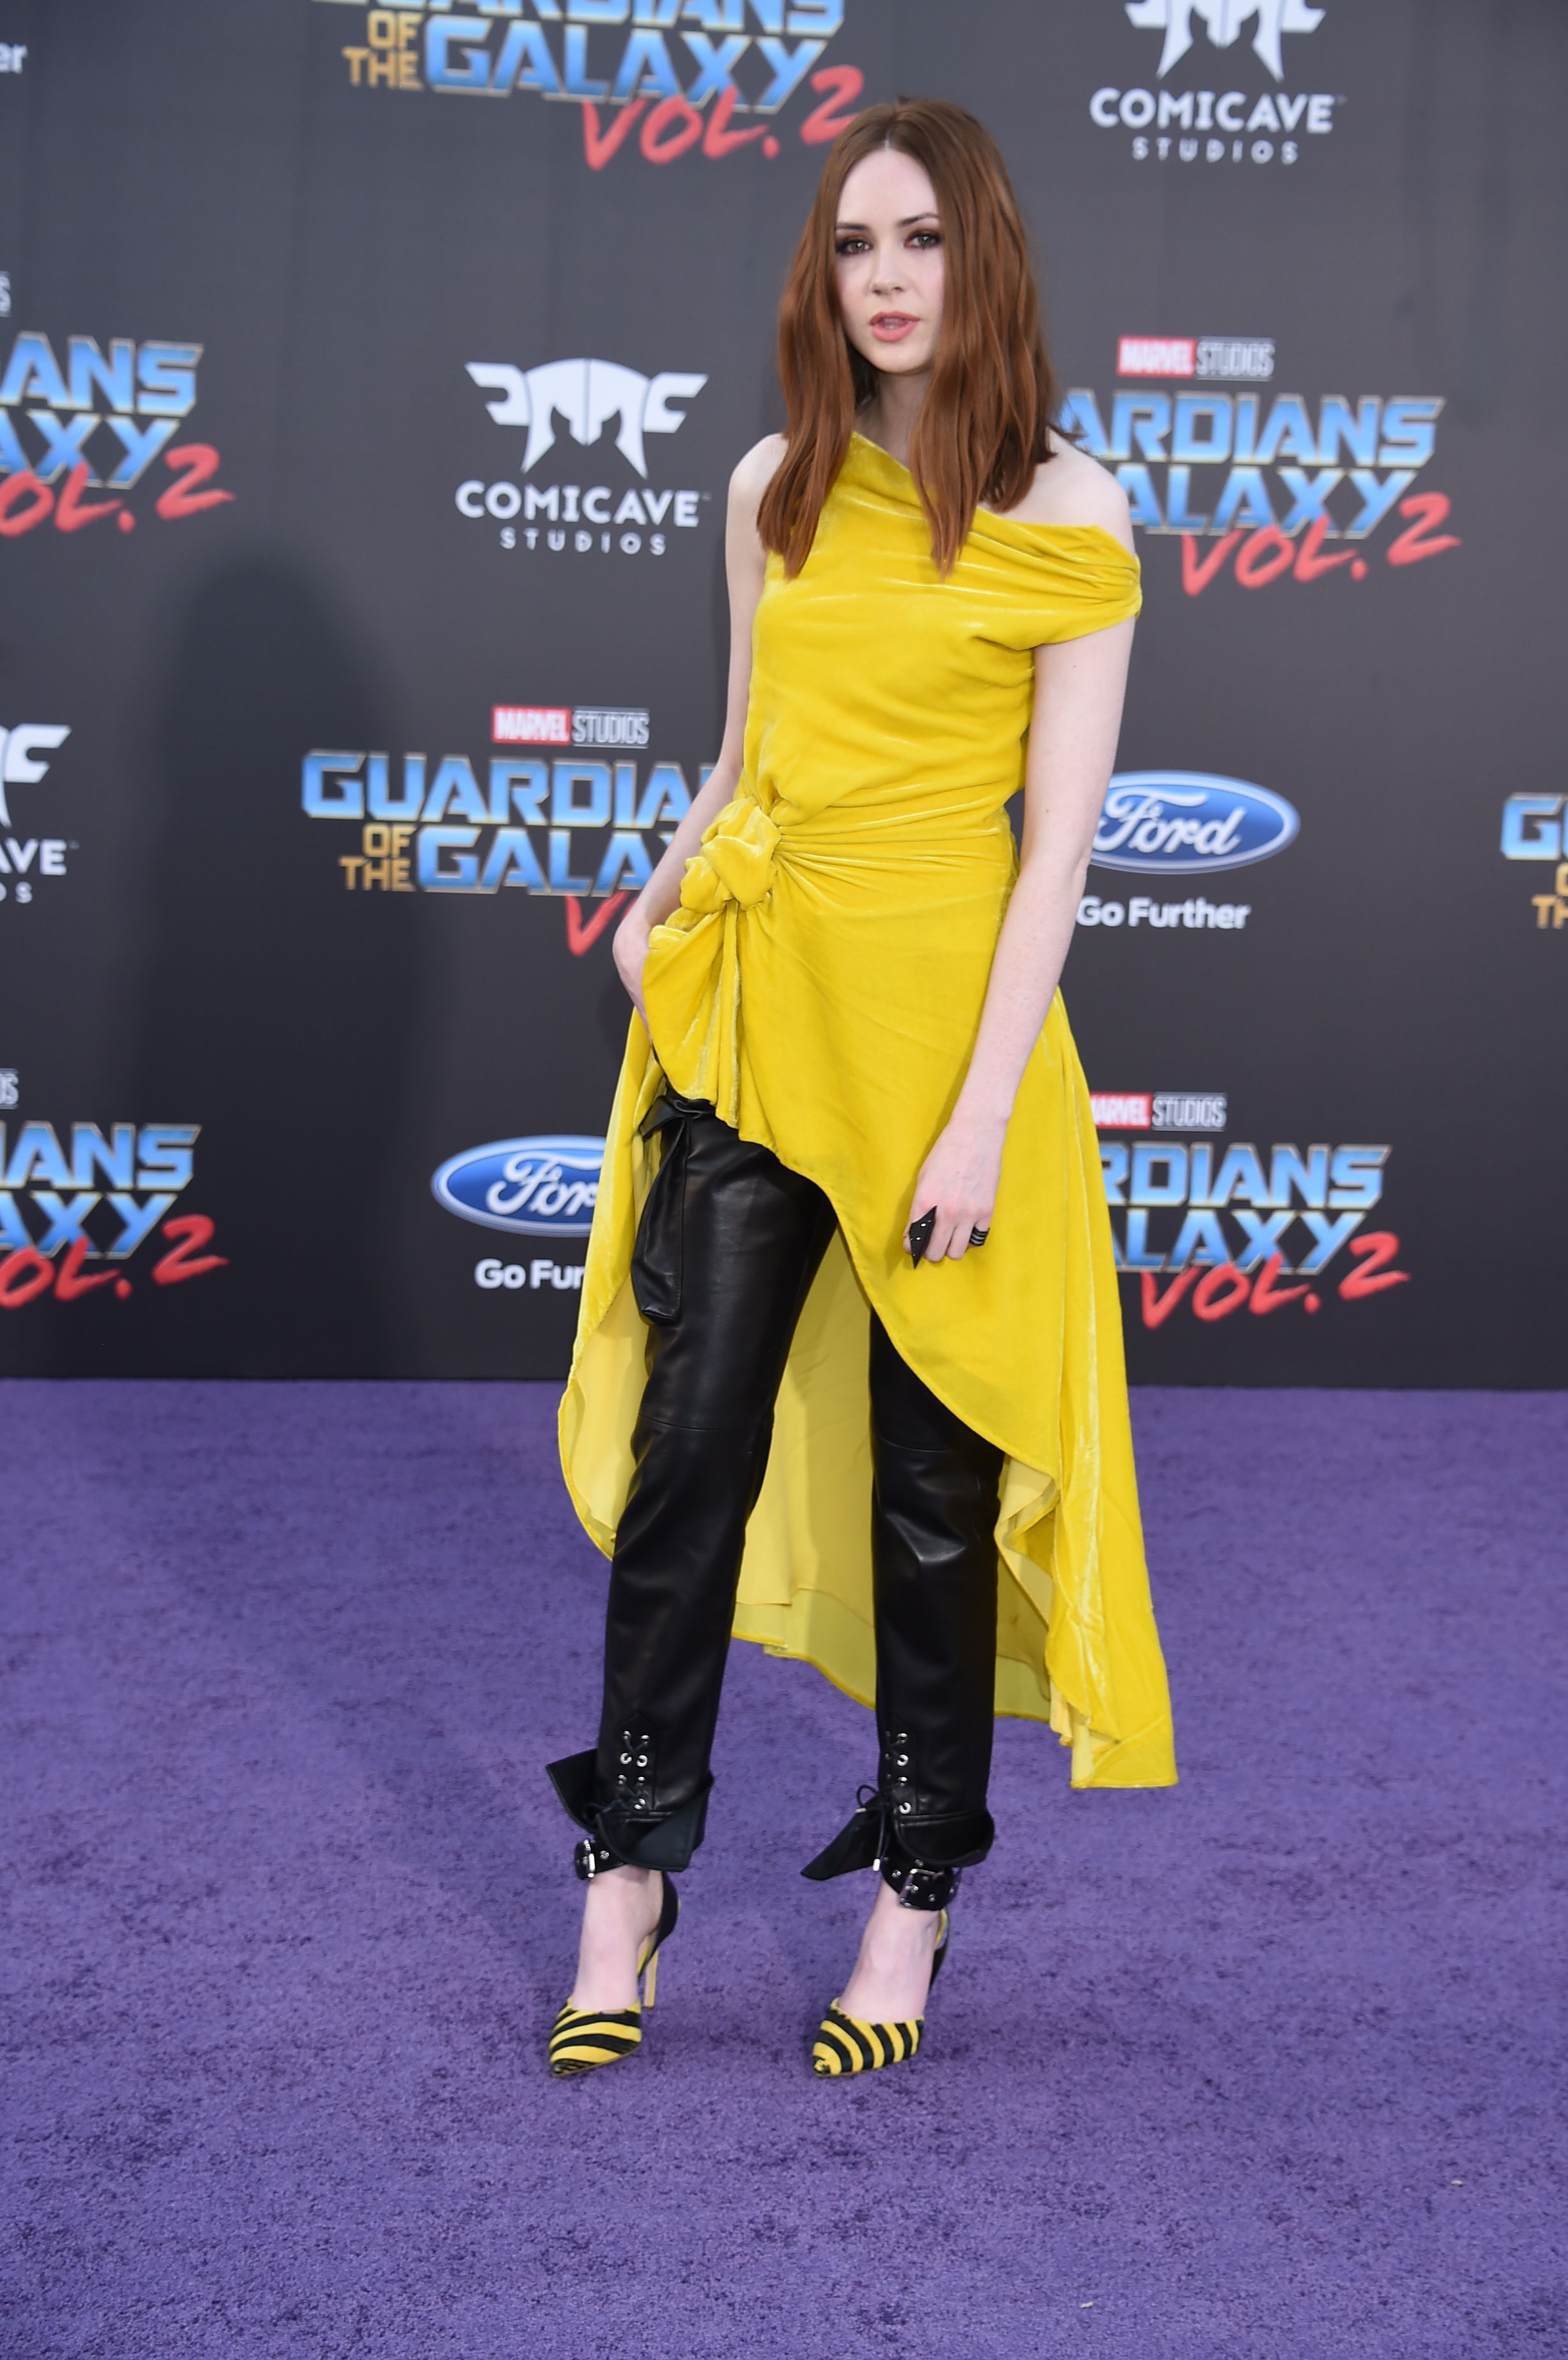 Karen Gillan attends Guardians of the Galaxy Vol. 2 Premiere